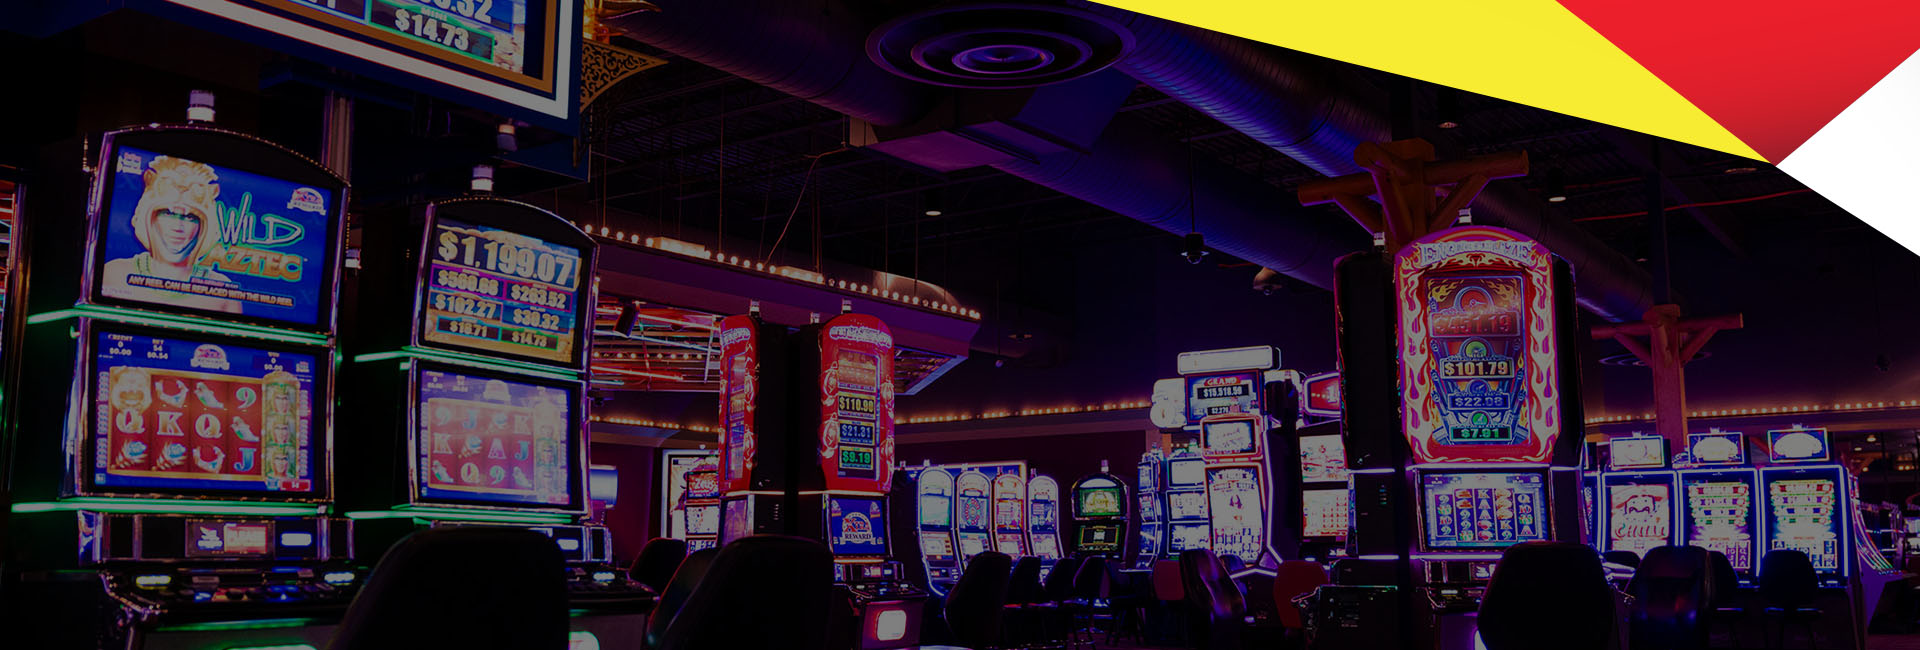 Free online casino slot games with bonus rounds no download no registration